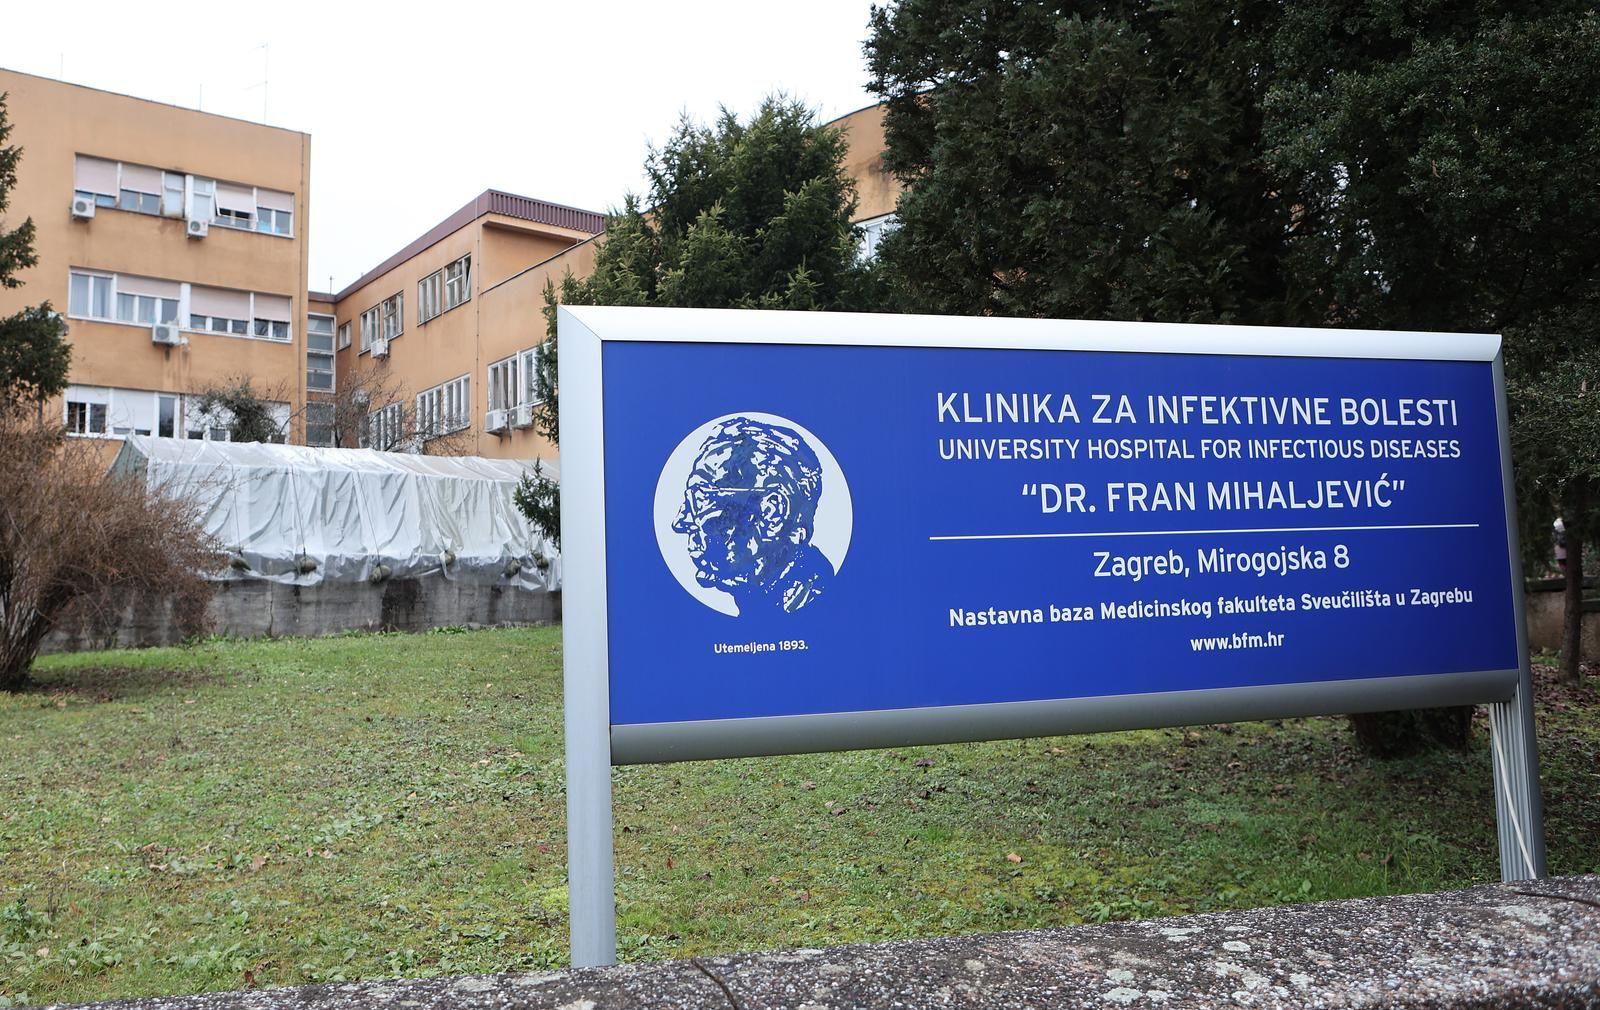 Klinika za infektivne bolesti "Dr Fran Mihaljević" - Avaz